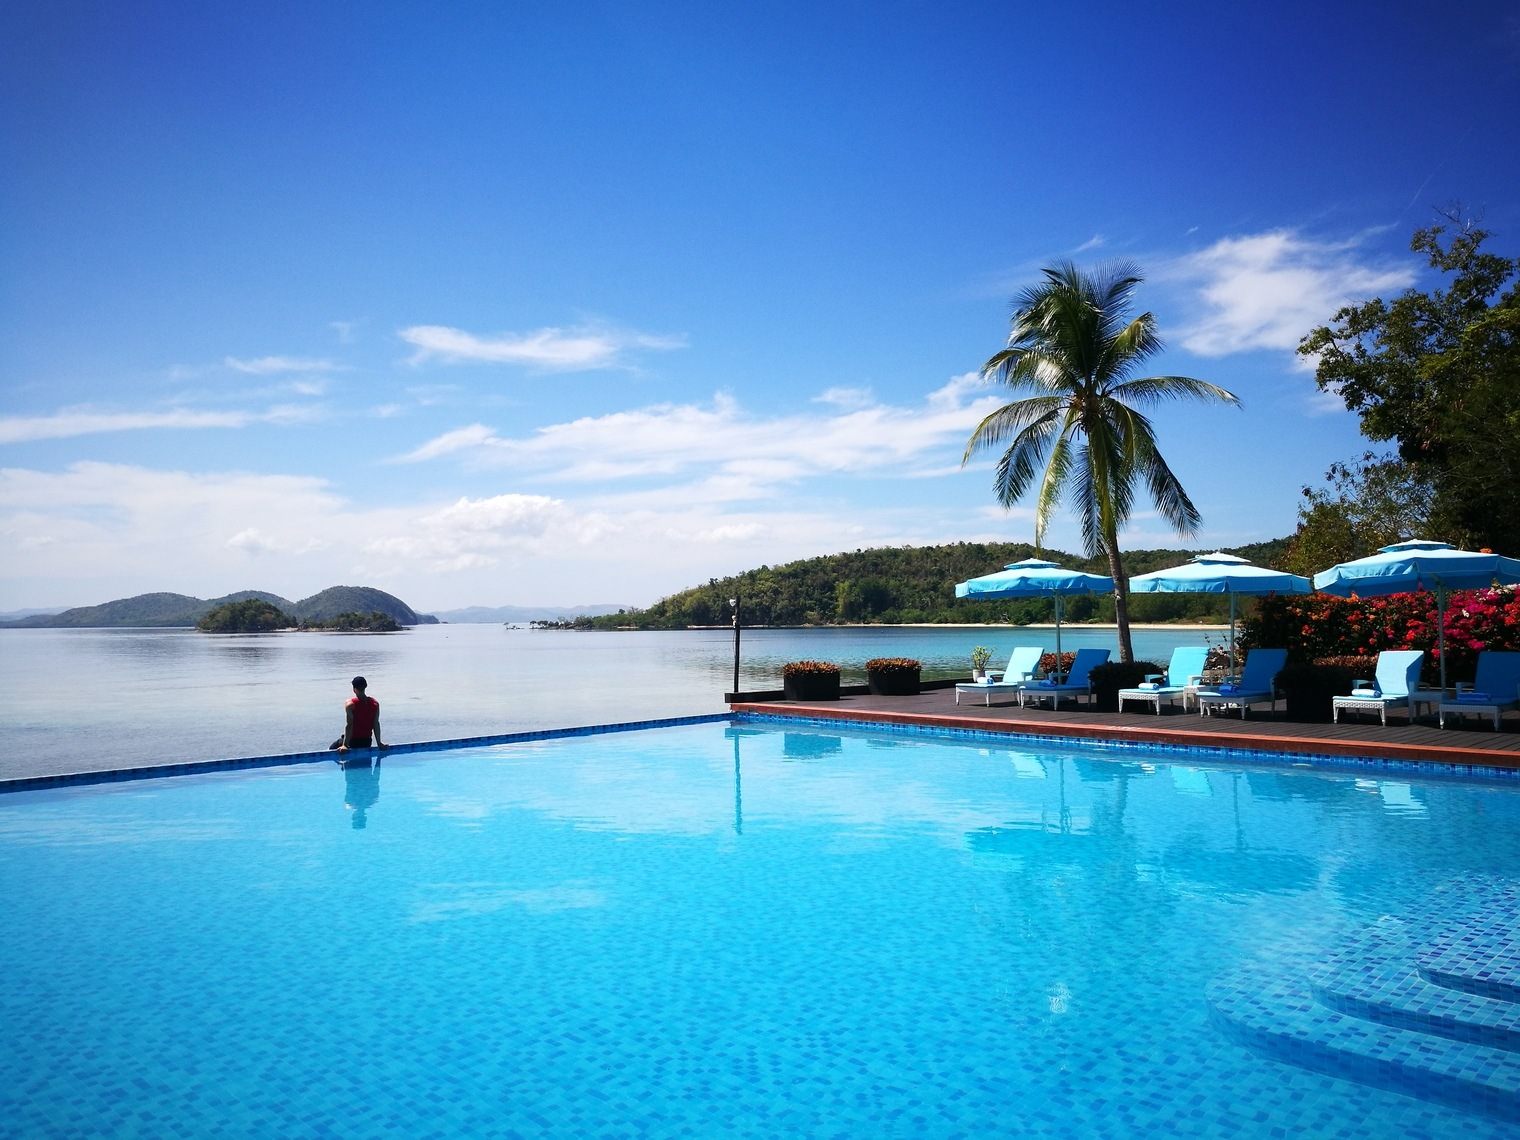 Find Peace and Solitude at HUMA Island Resort and Spa in Busuanga, Palawan